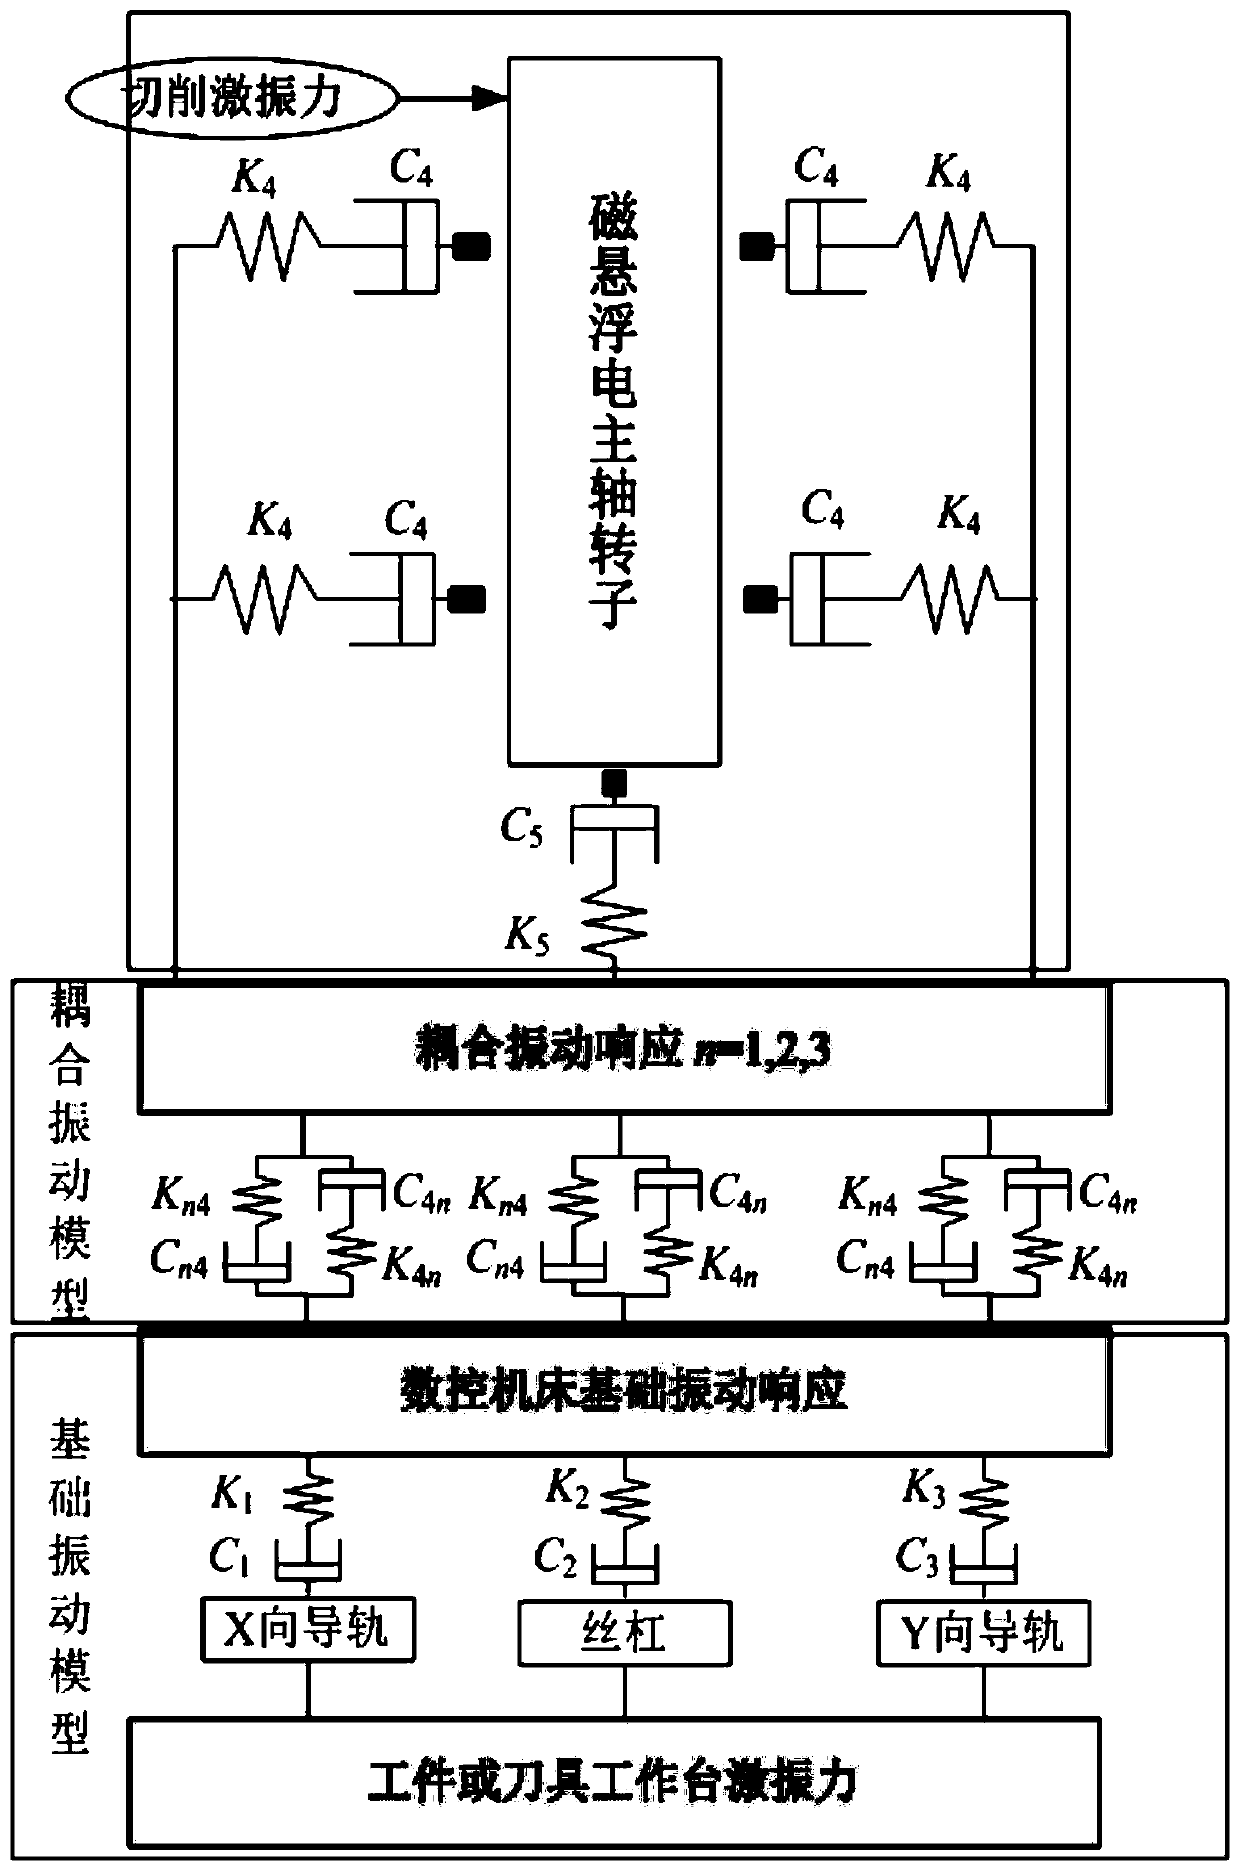 Self-adaptive hybrid control method for magnetic levitation electric main shaft